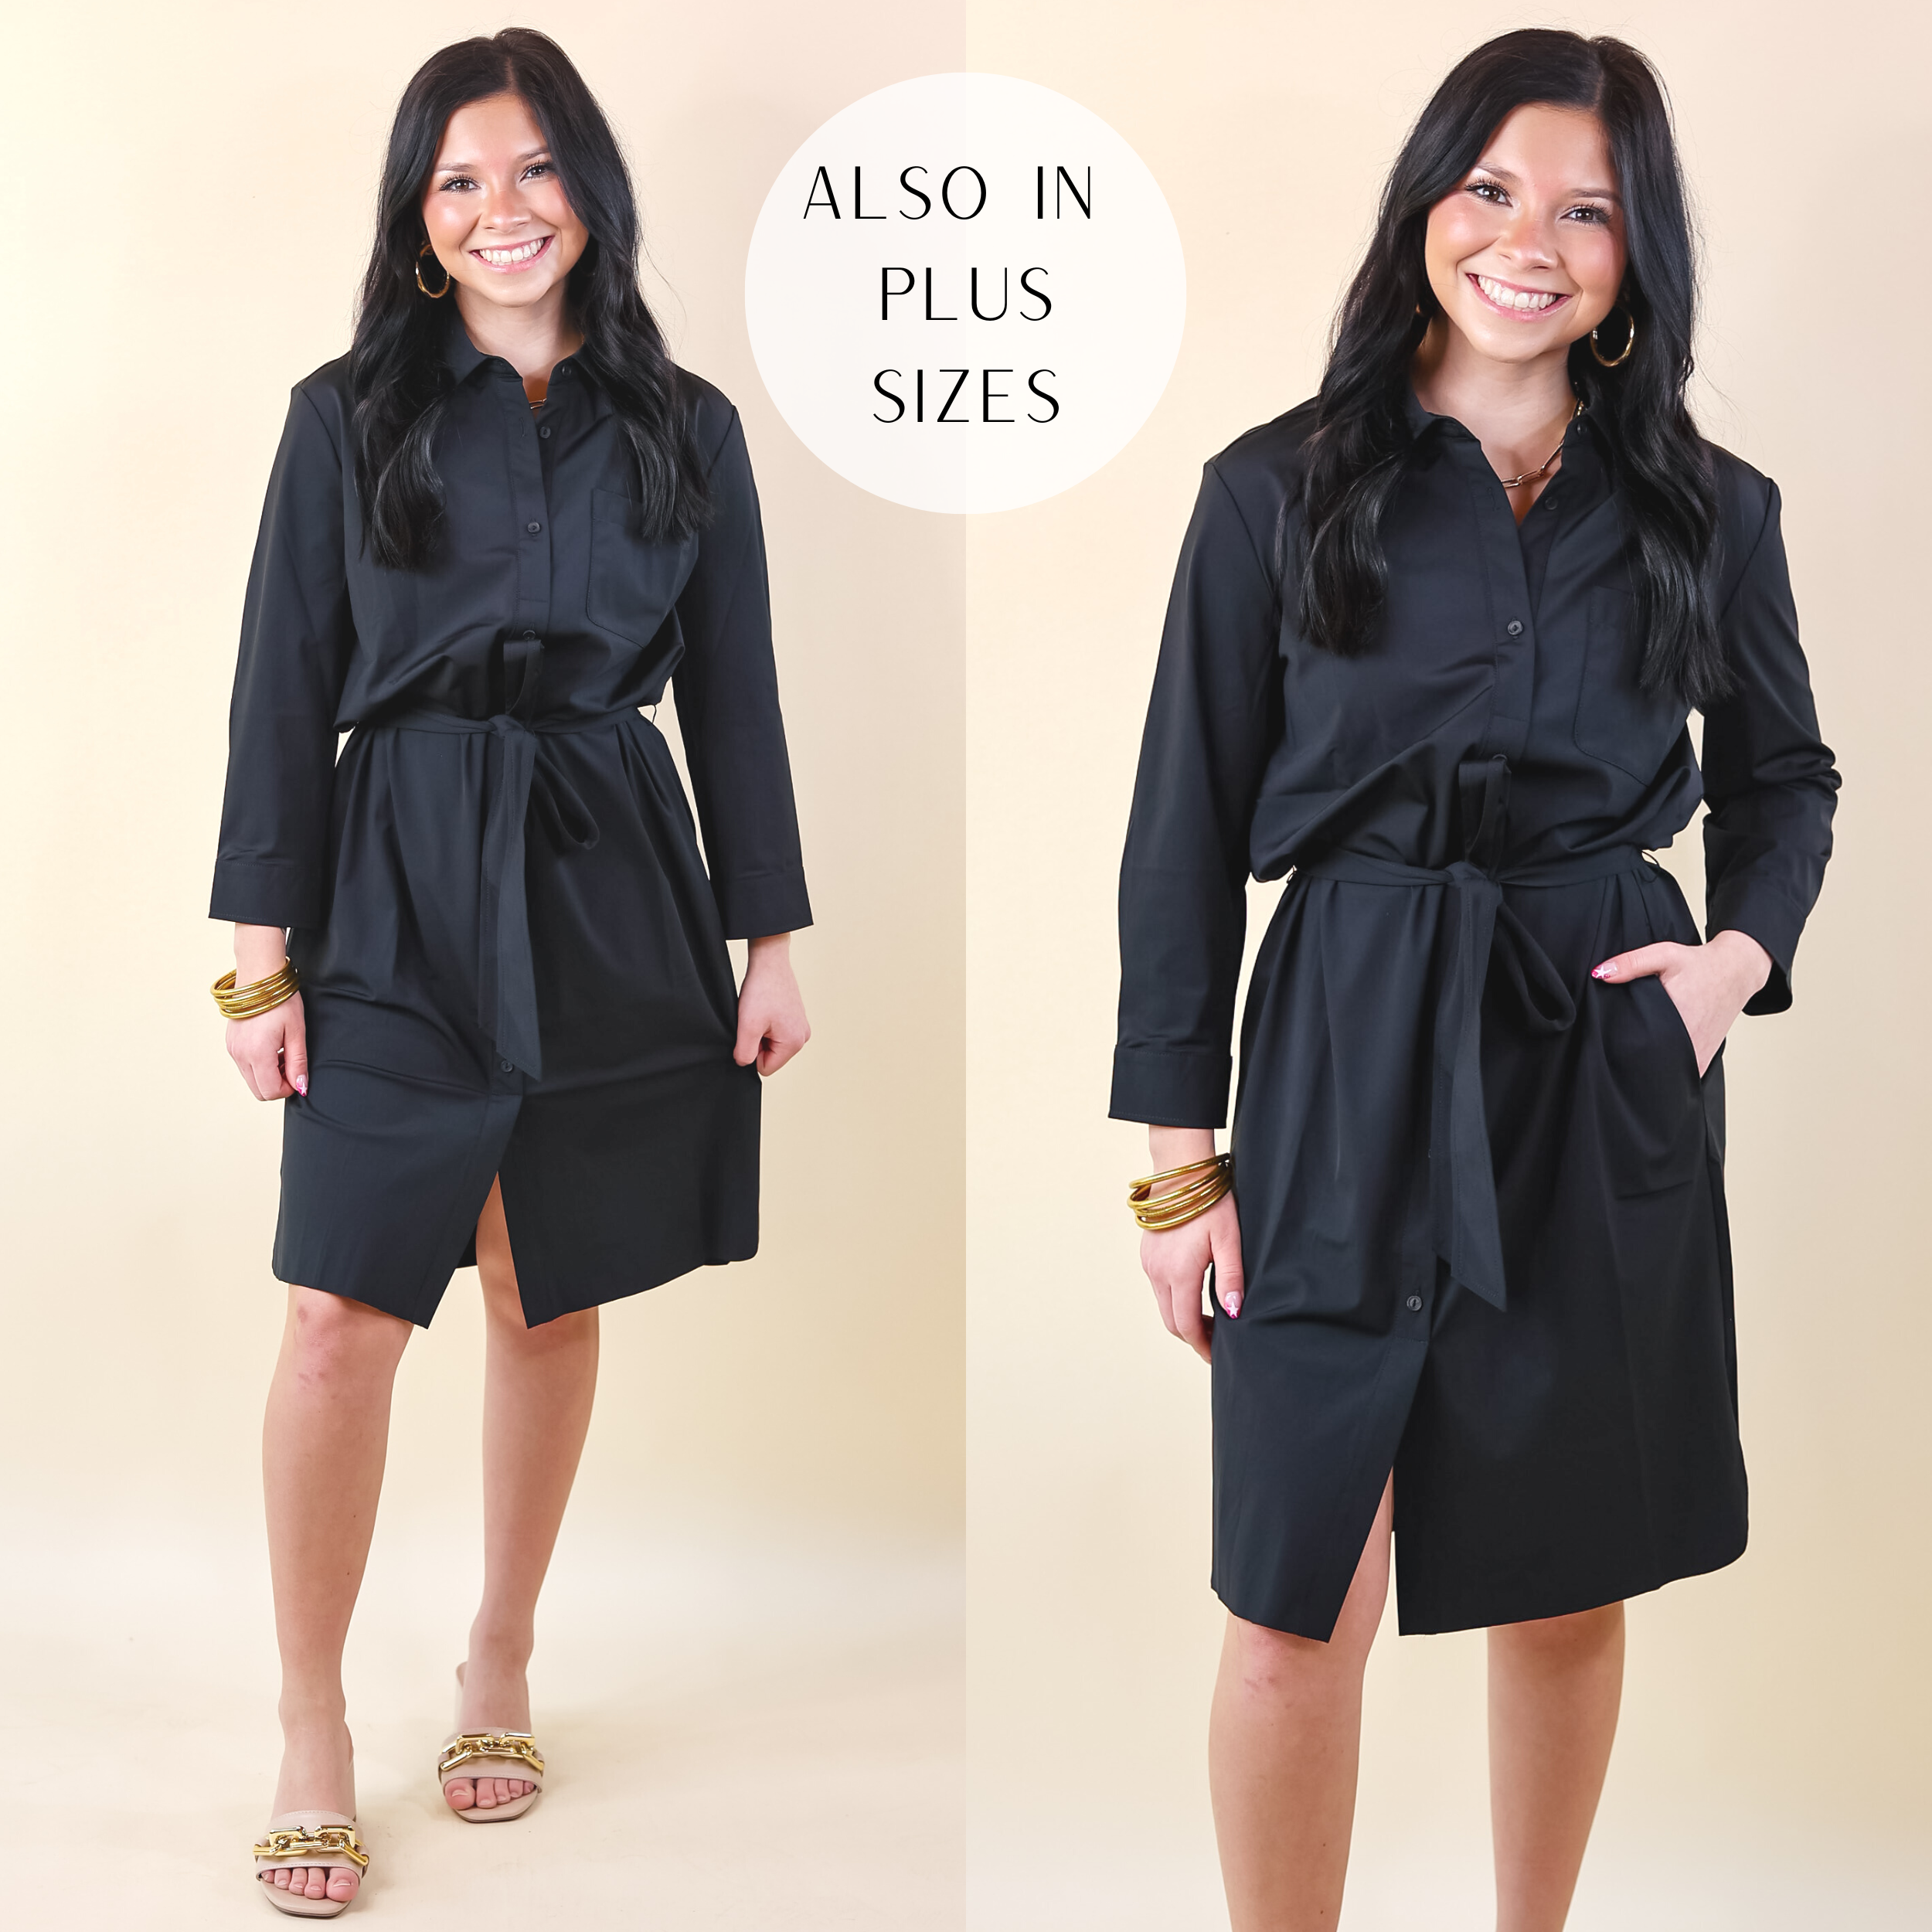 Lyssé | Schiffer Button Down Dress Dress in Black - Giddy Up Glamour Boutique